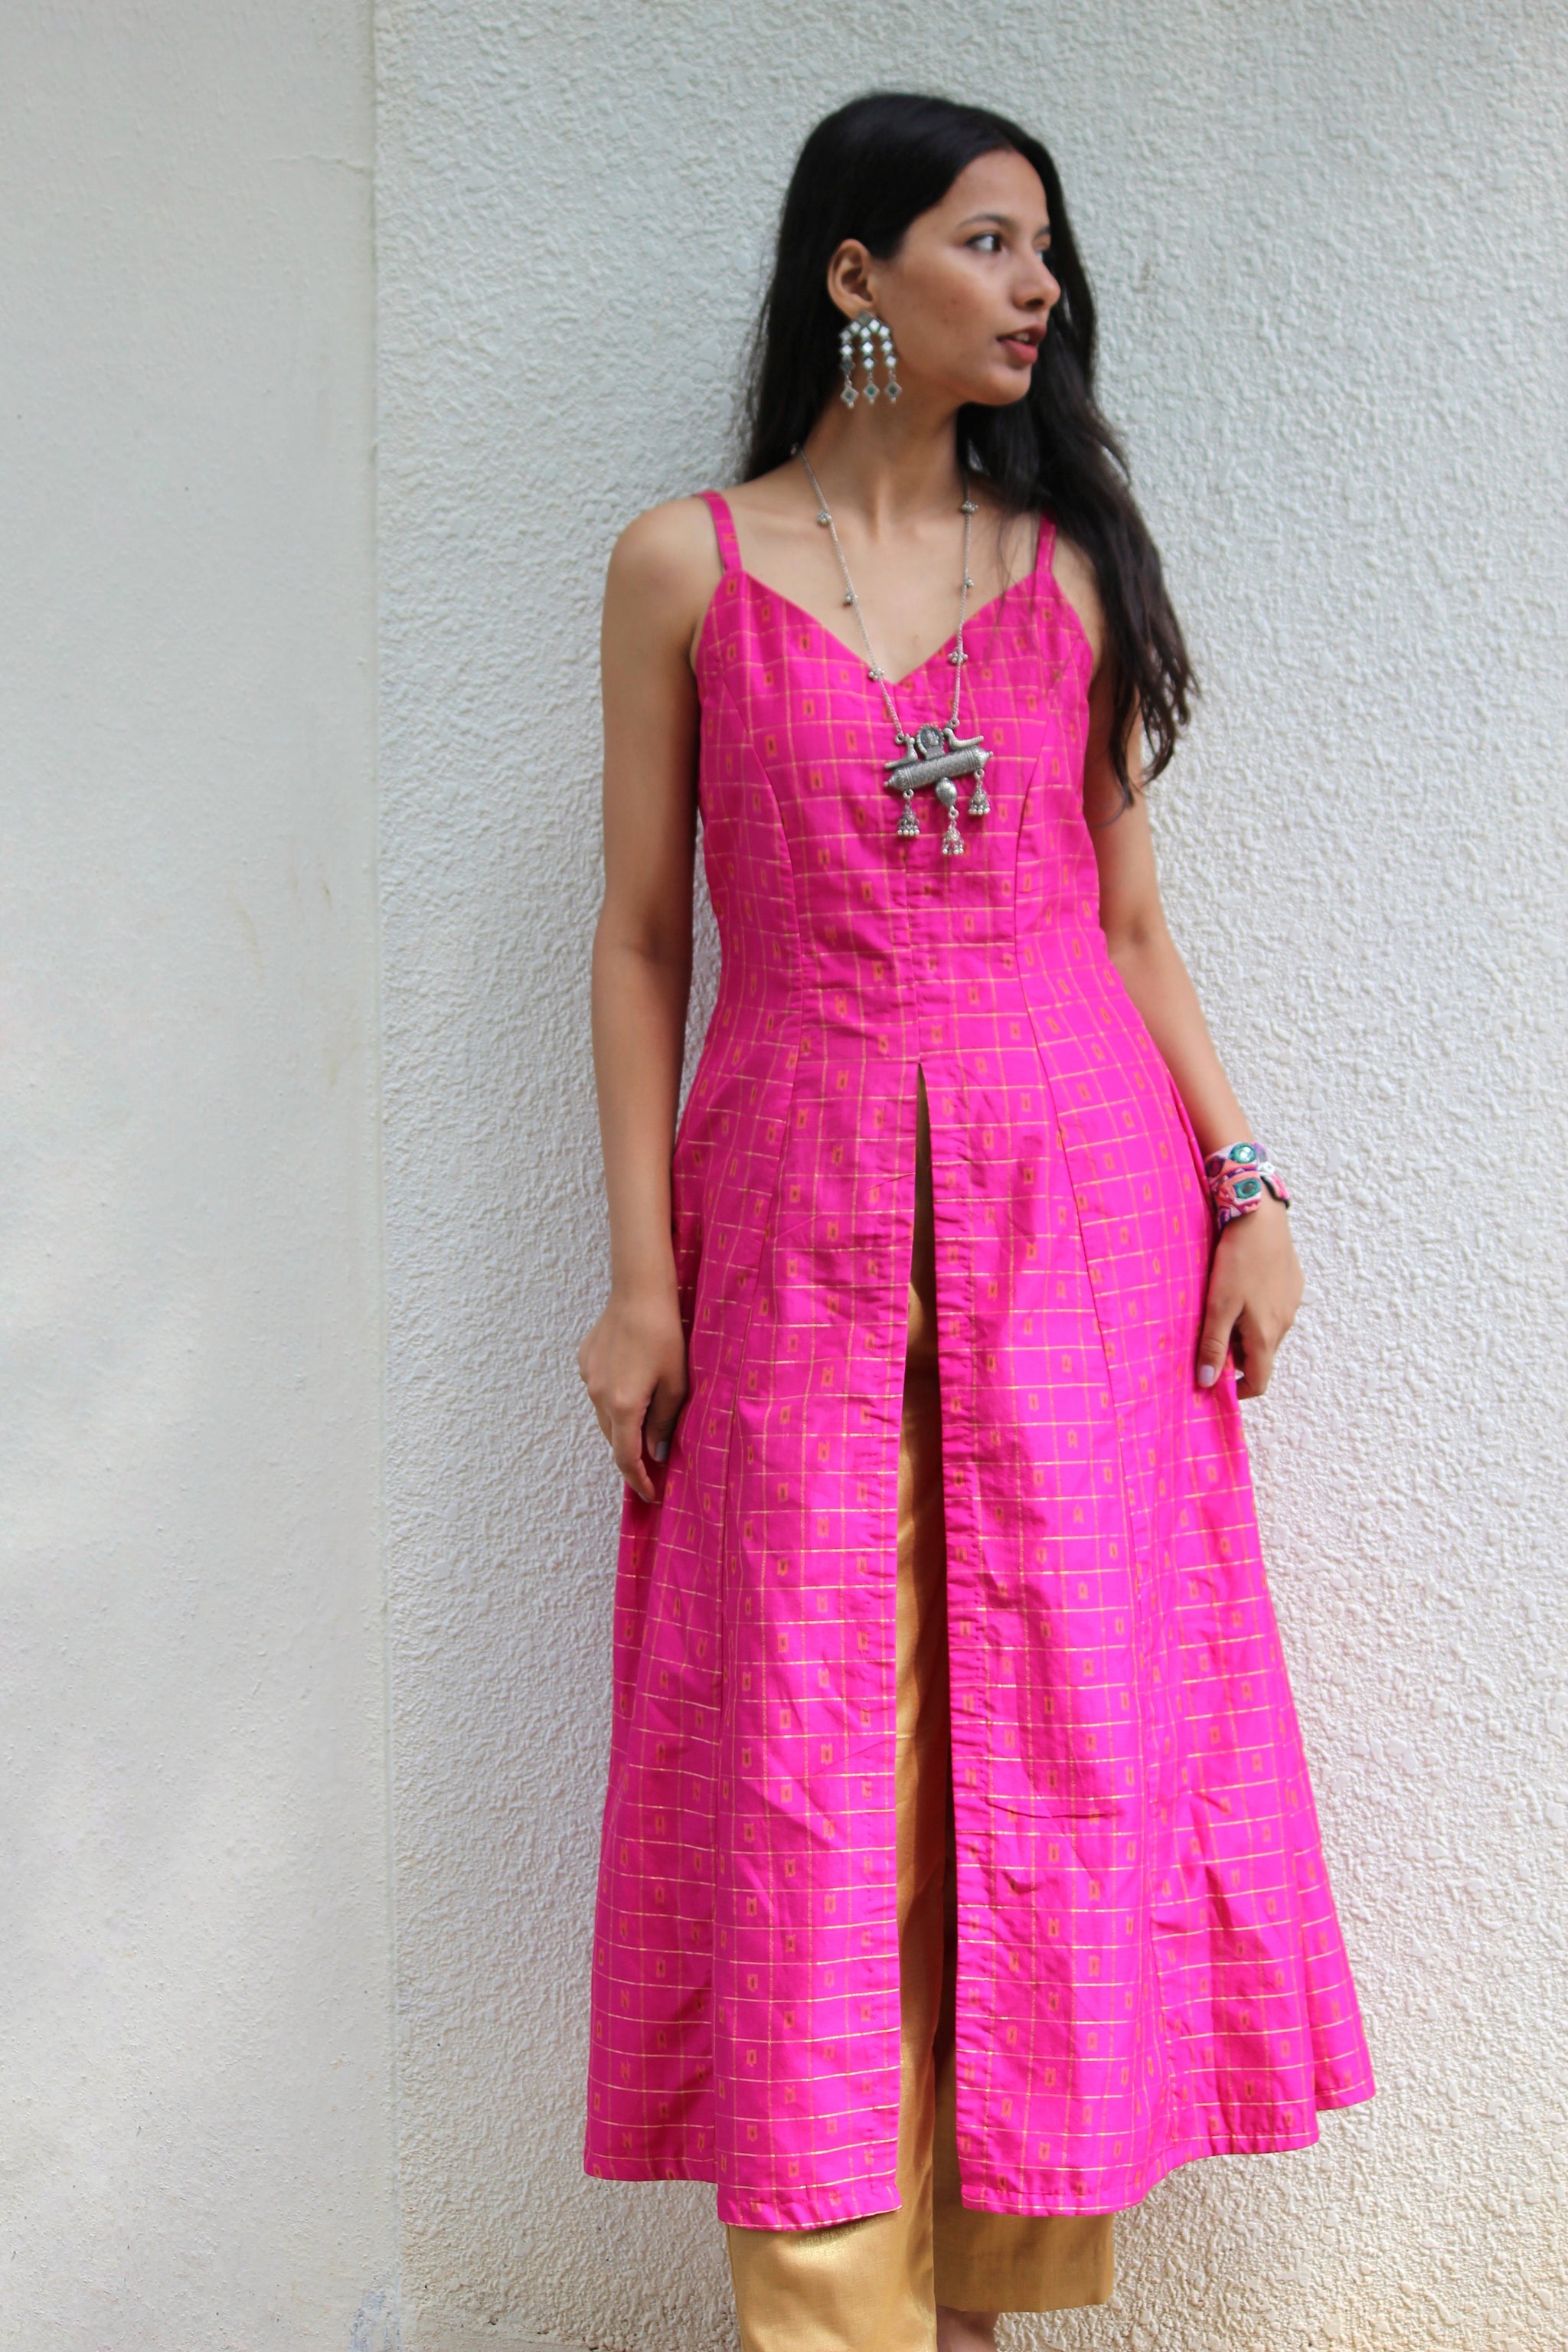 Cute Fuchsia Dress - Pink Dress - Sleeveless Dress - $42.00 - Lulus